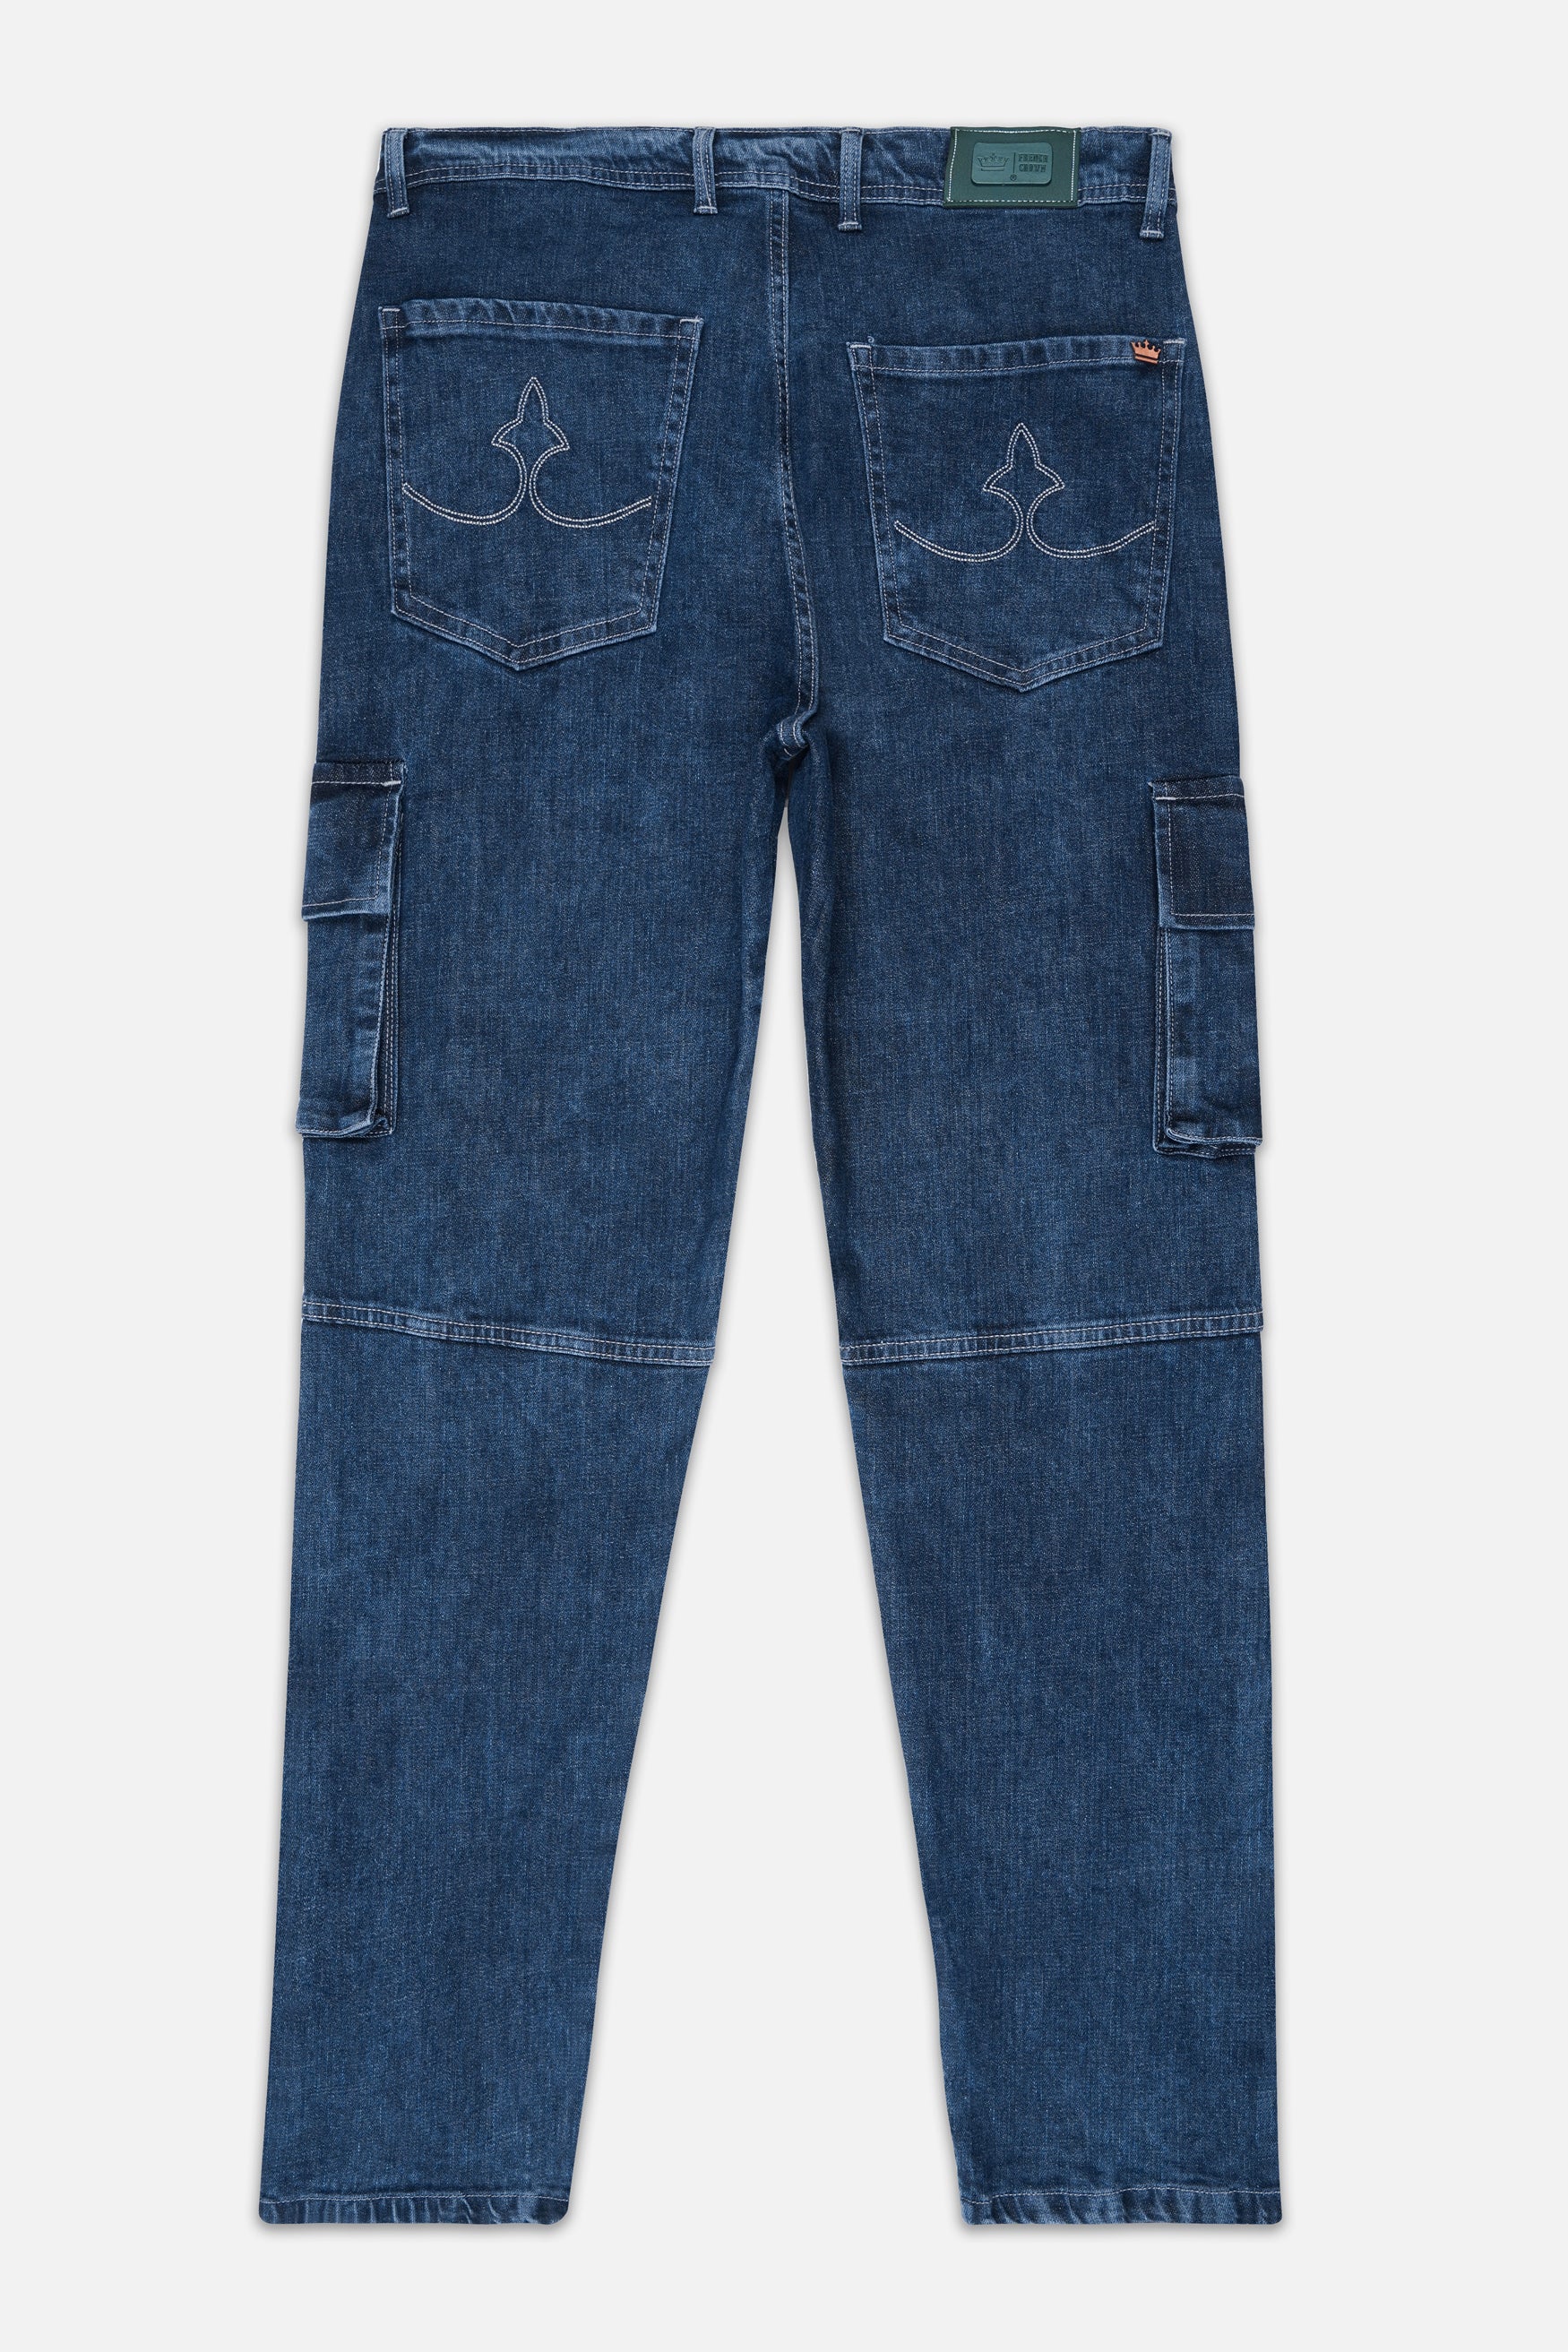 Zush Men's plus size stretchable denim jeans in dark blue – zush